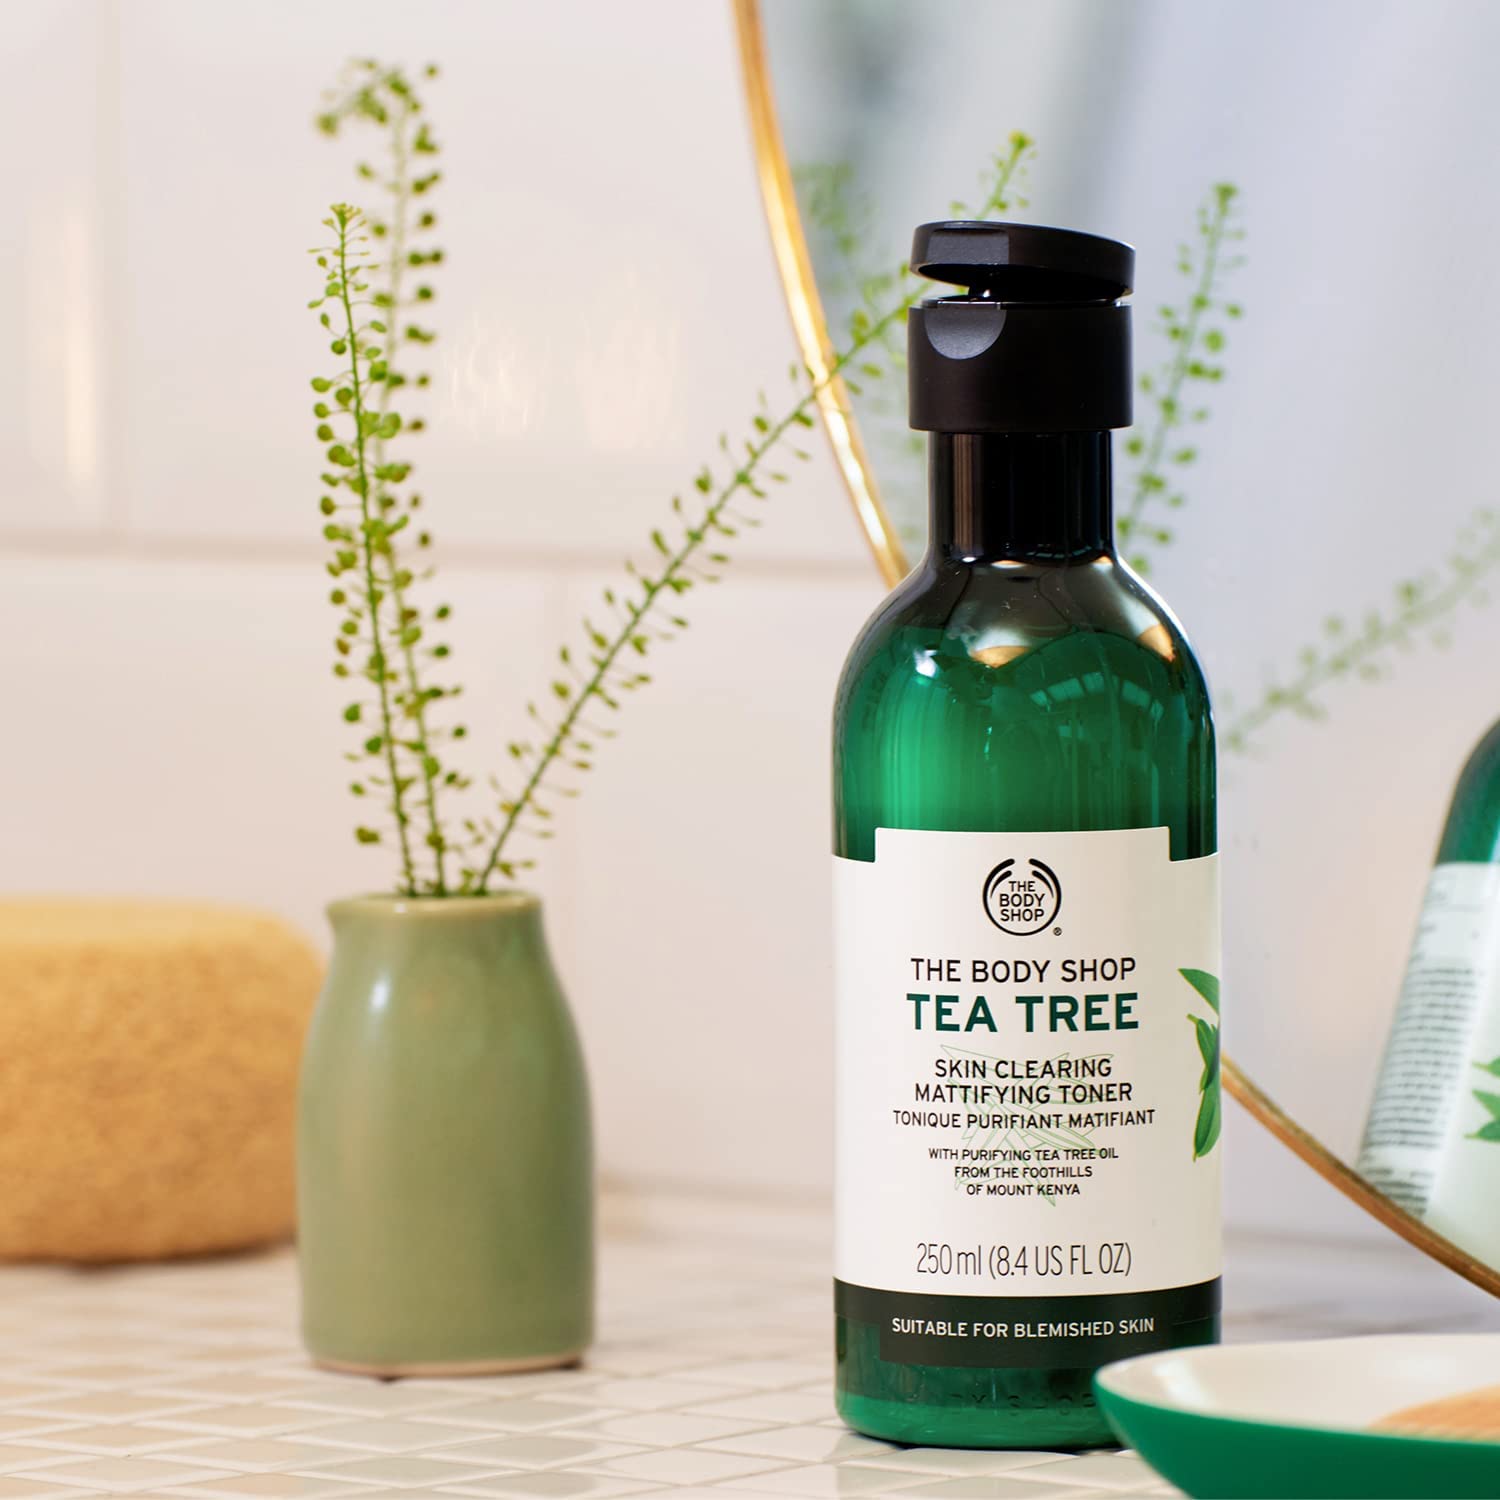 تونر تی تری بادی شاپ The Body Shop Tea Tree Skin Clearing Mattifying Toner | 250ml